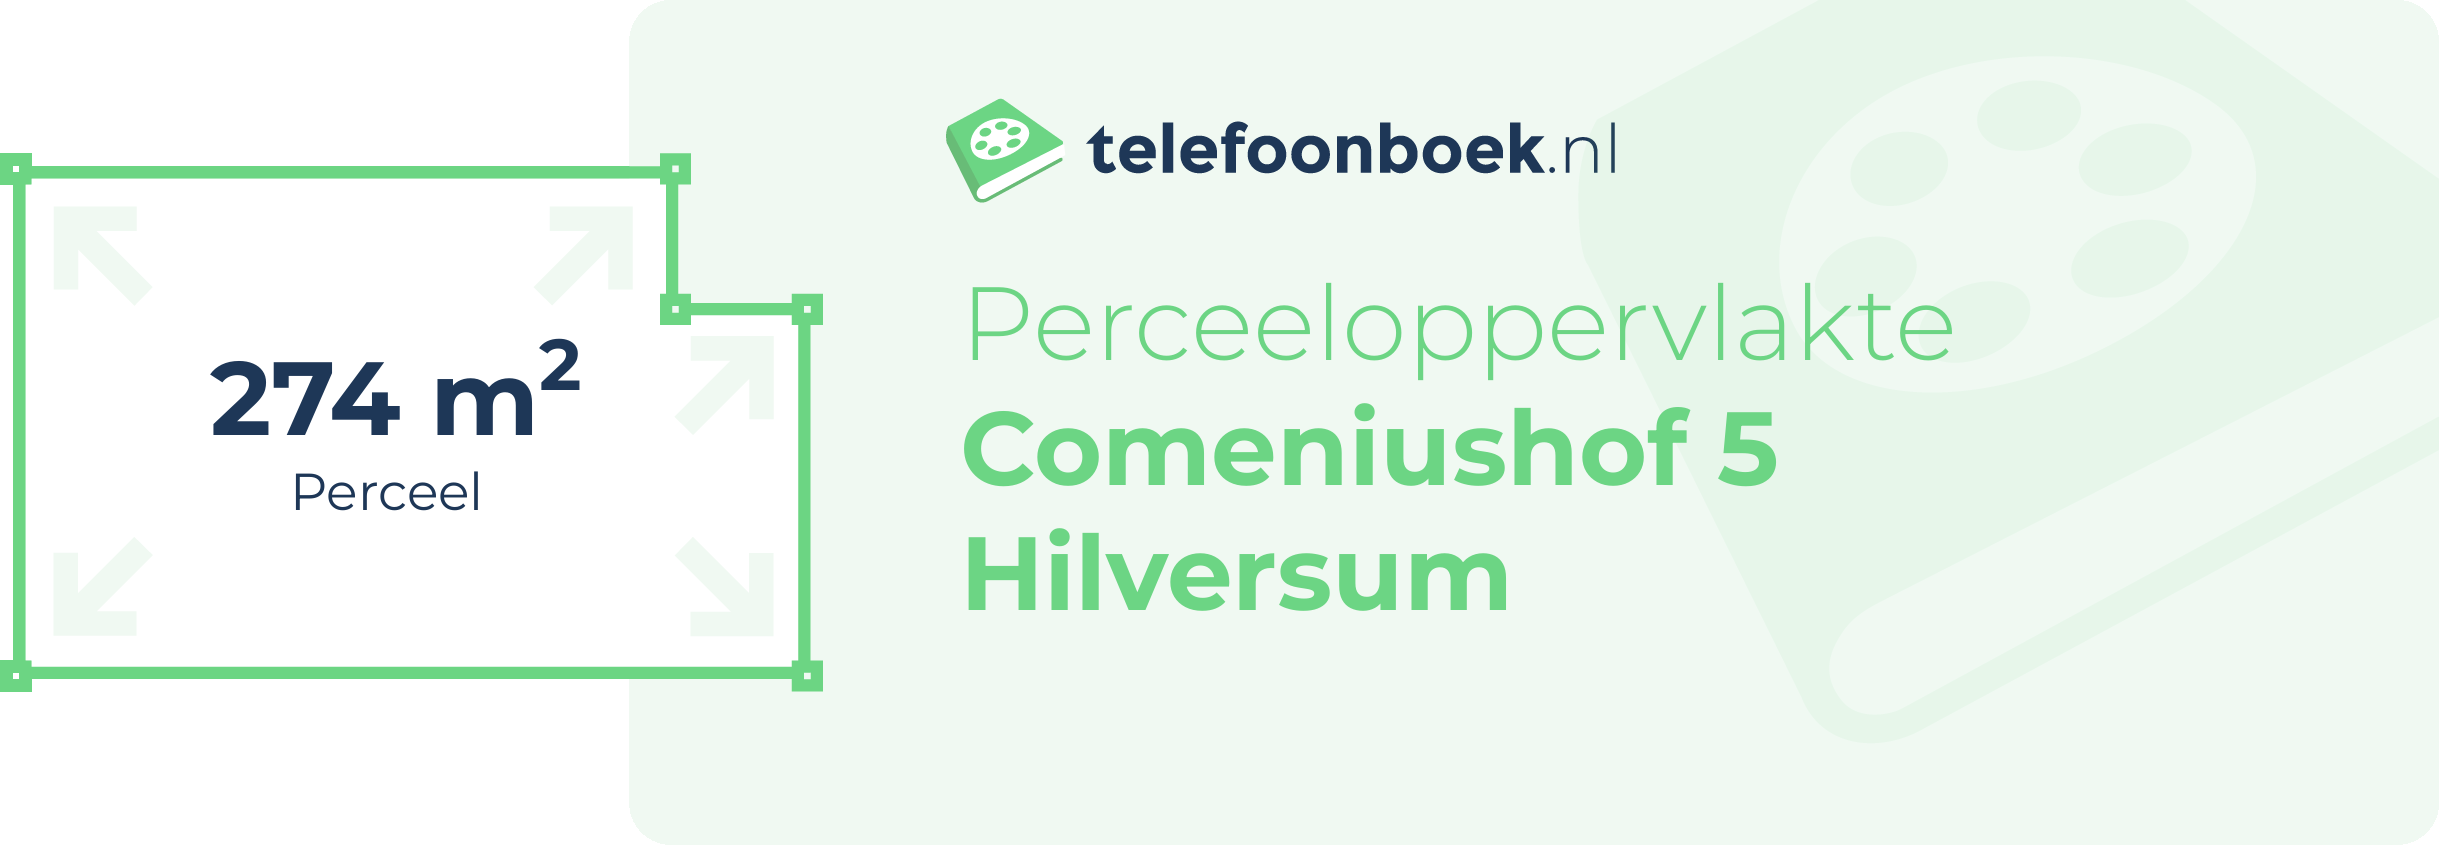 Perceeloppervlakte Comeniushof 5 Hilversum